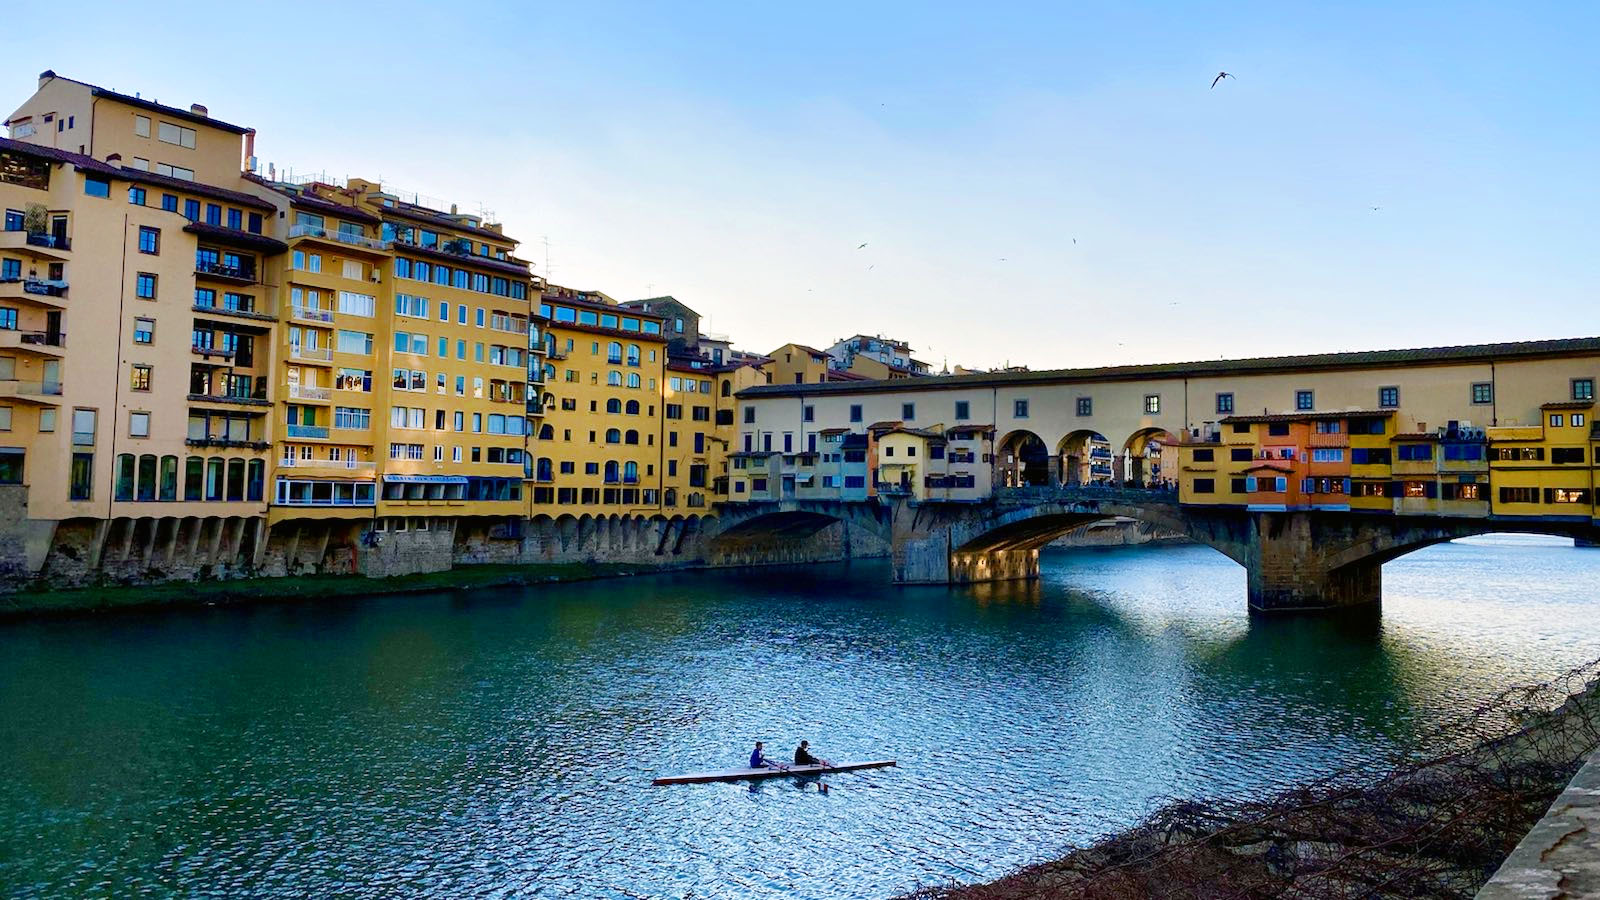 Die berühmte Brücke Ponte Vecchio über dem Arno, Florenz